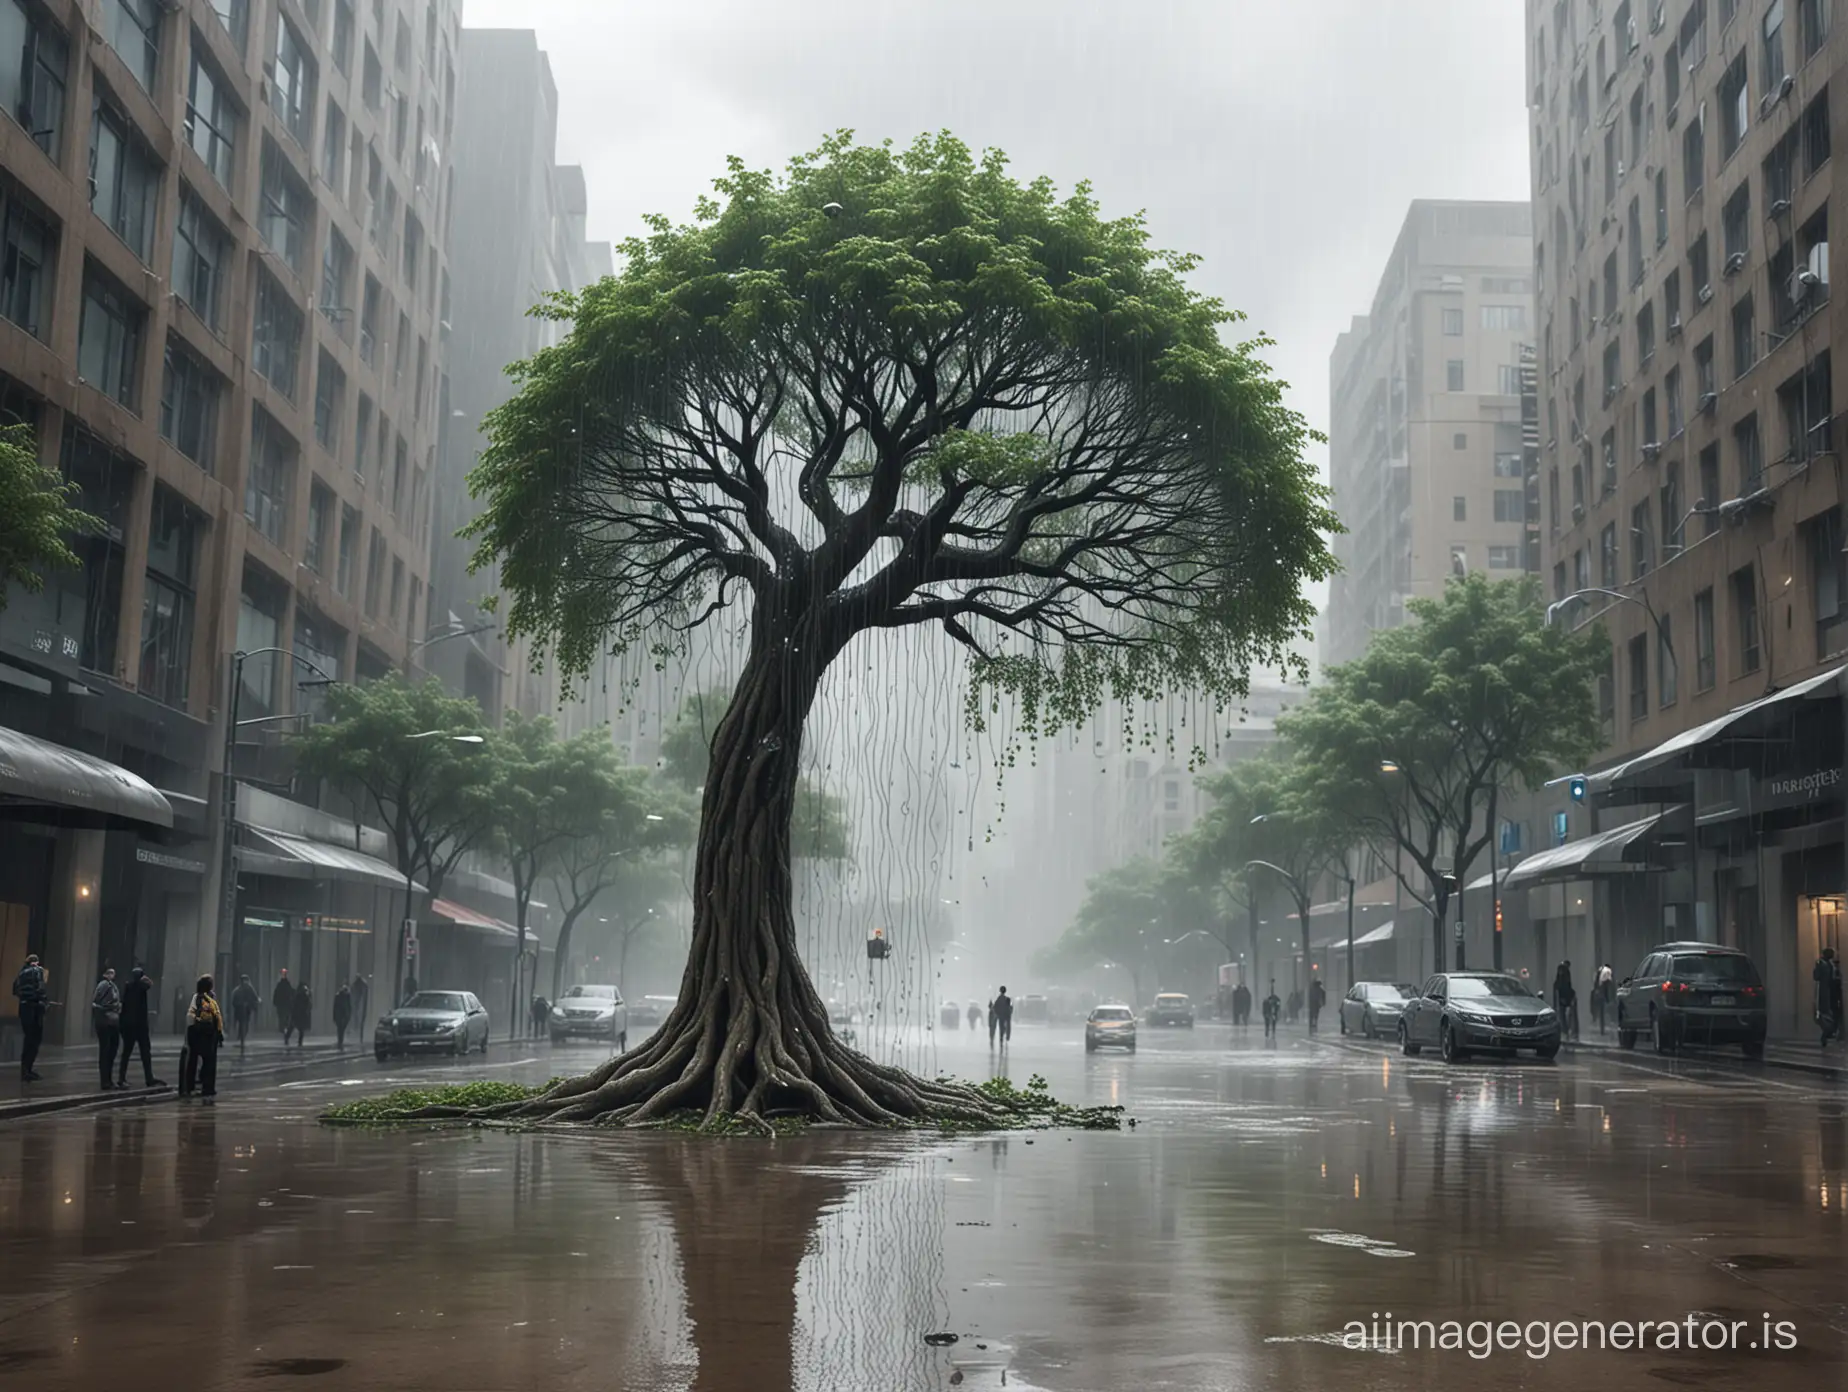 Futuristic-Rainwater-Collection-Biomorphic-Tree-in-Urban-Setting